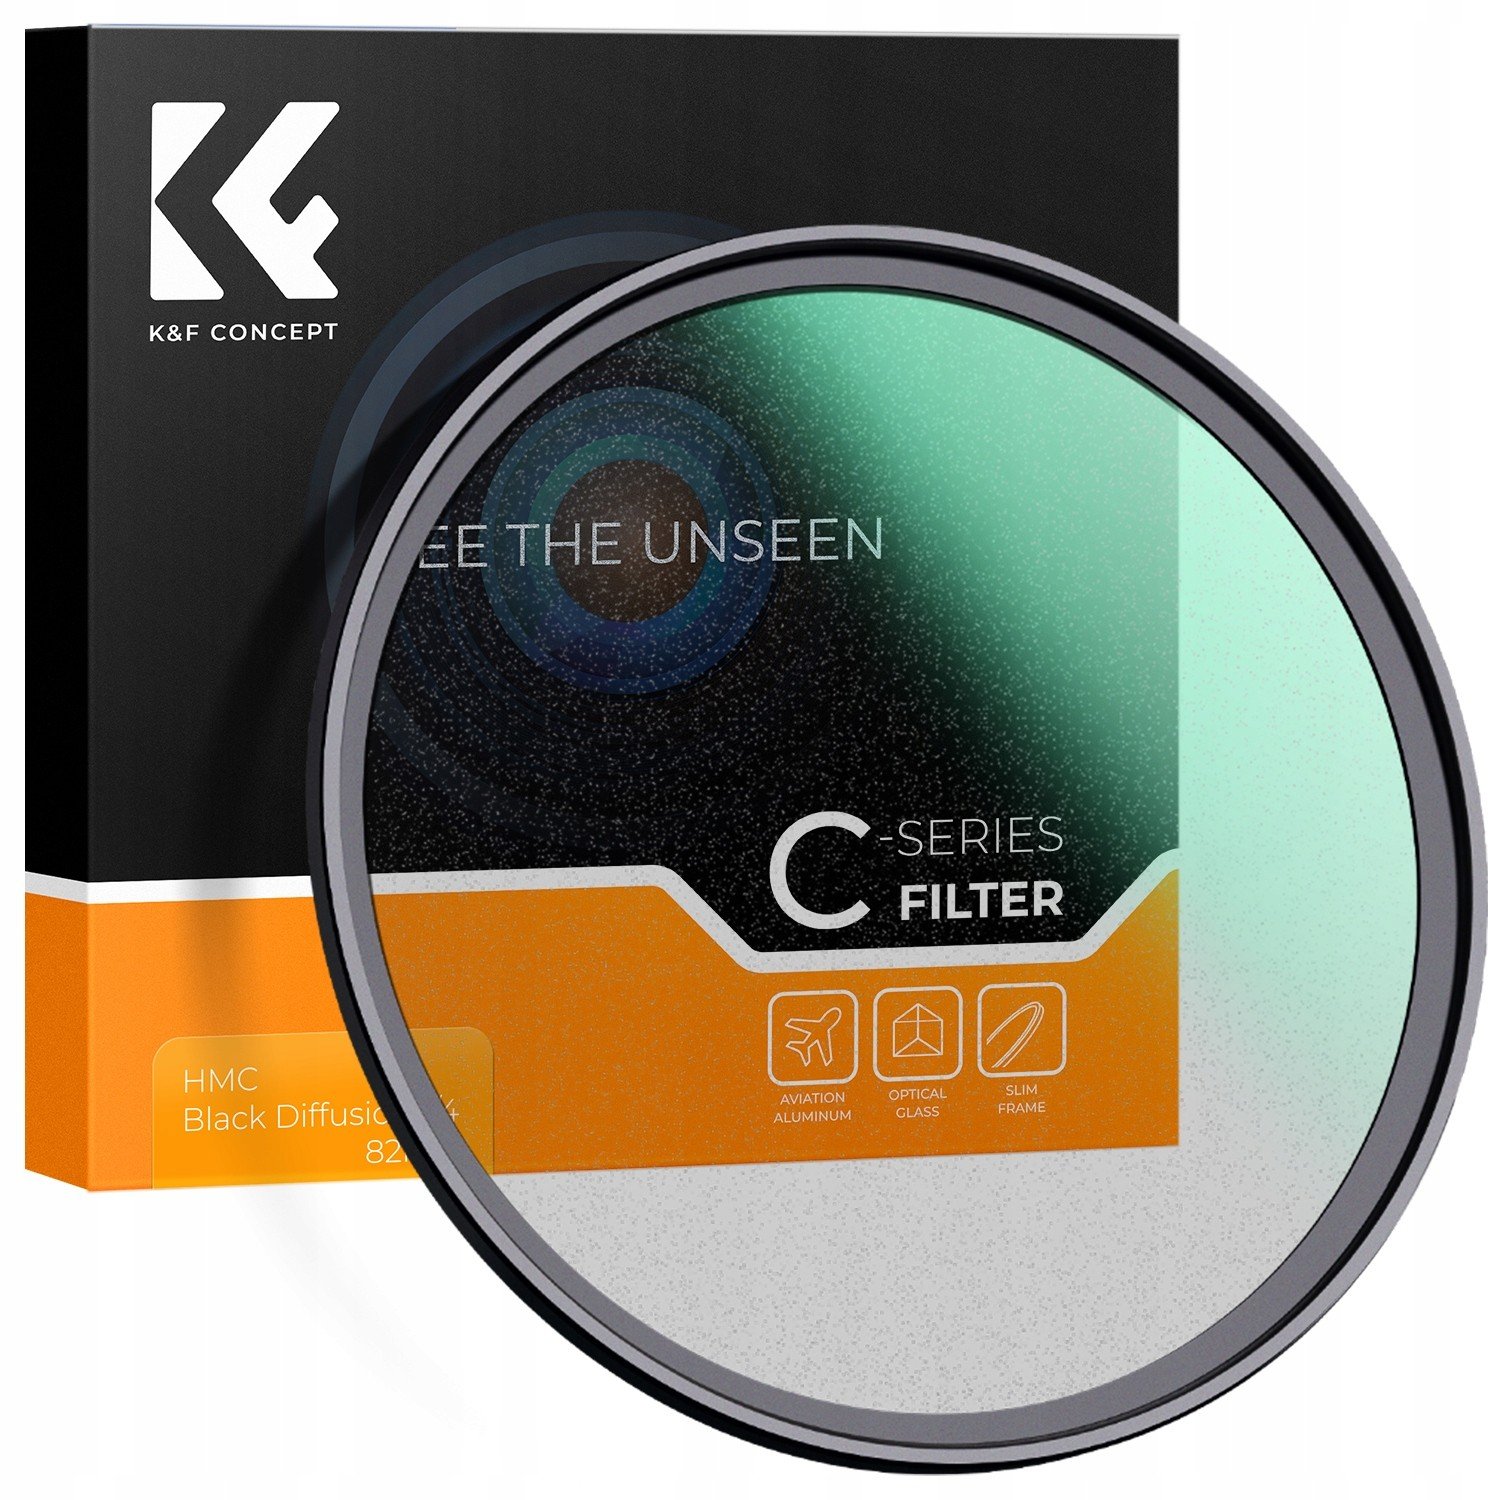 Difuzní filtr Black Mist 1/4 58mm Nano-C K&f